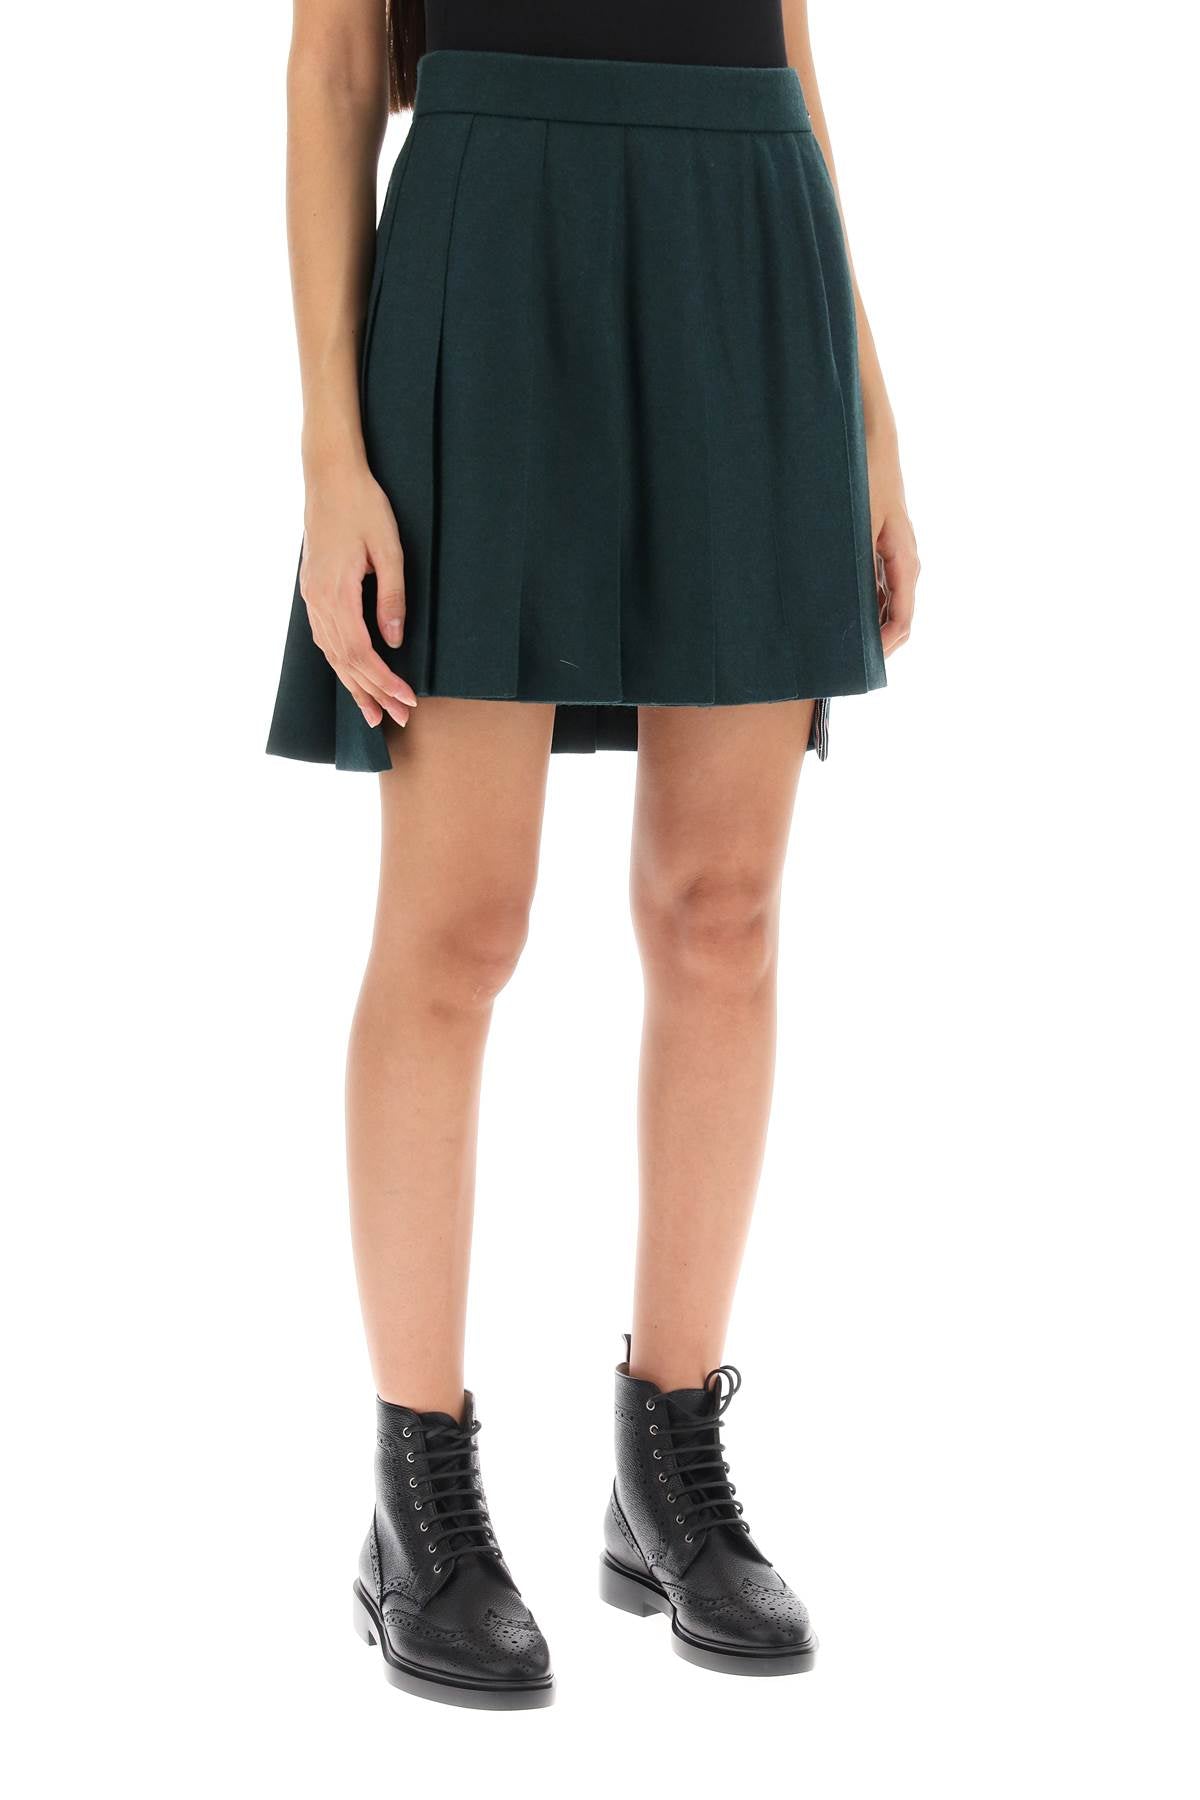 Thom browne flannel mini pleated skirt-1